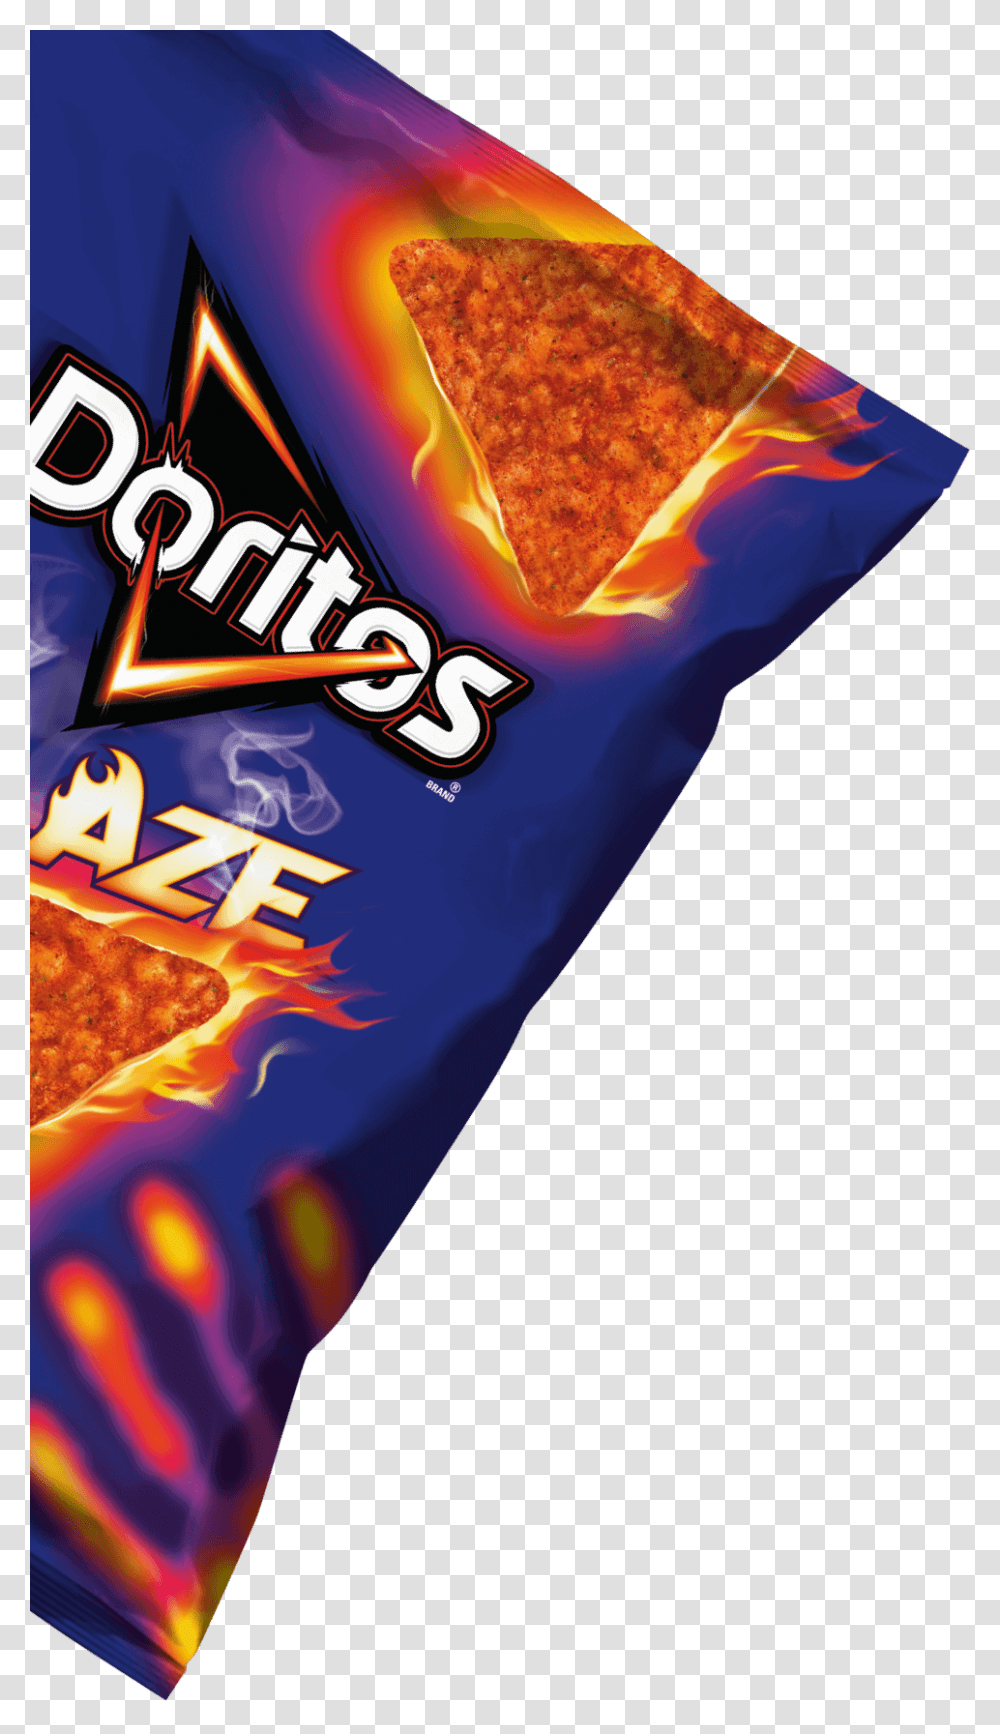 Doritos Logo Jpg Royalty Free Doritos Blaze, Bread, Food, Toast, French Toast Transparent Png